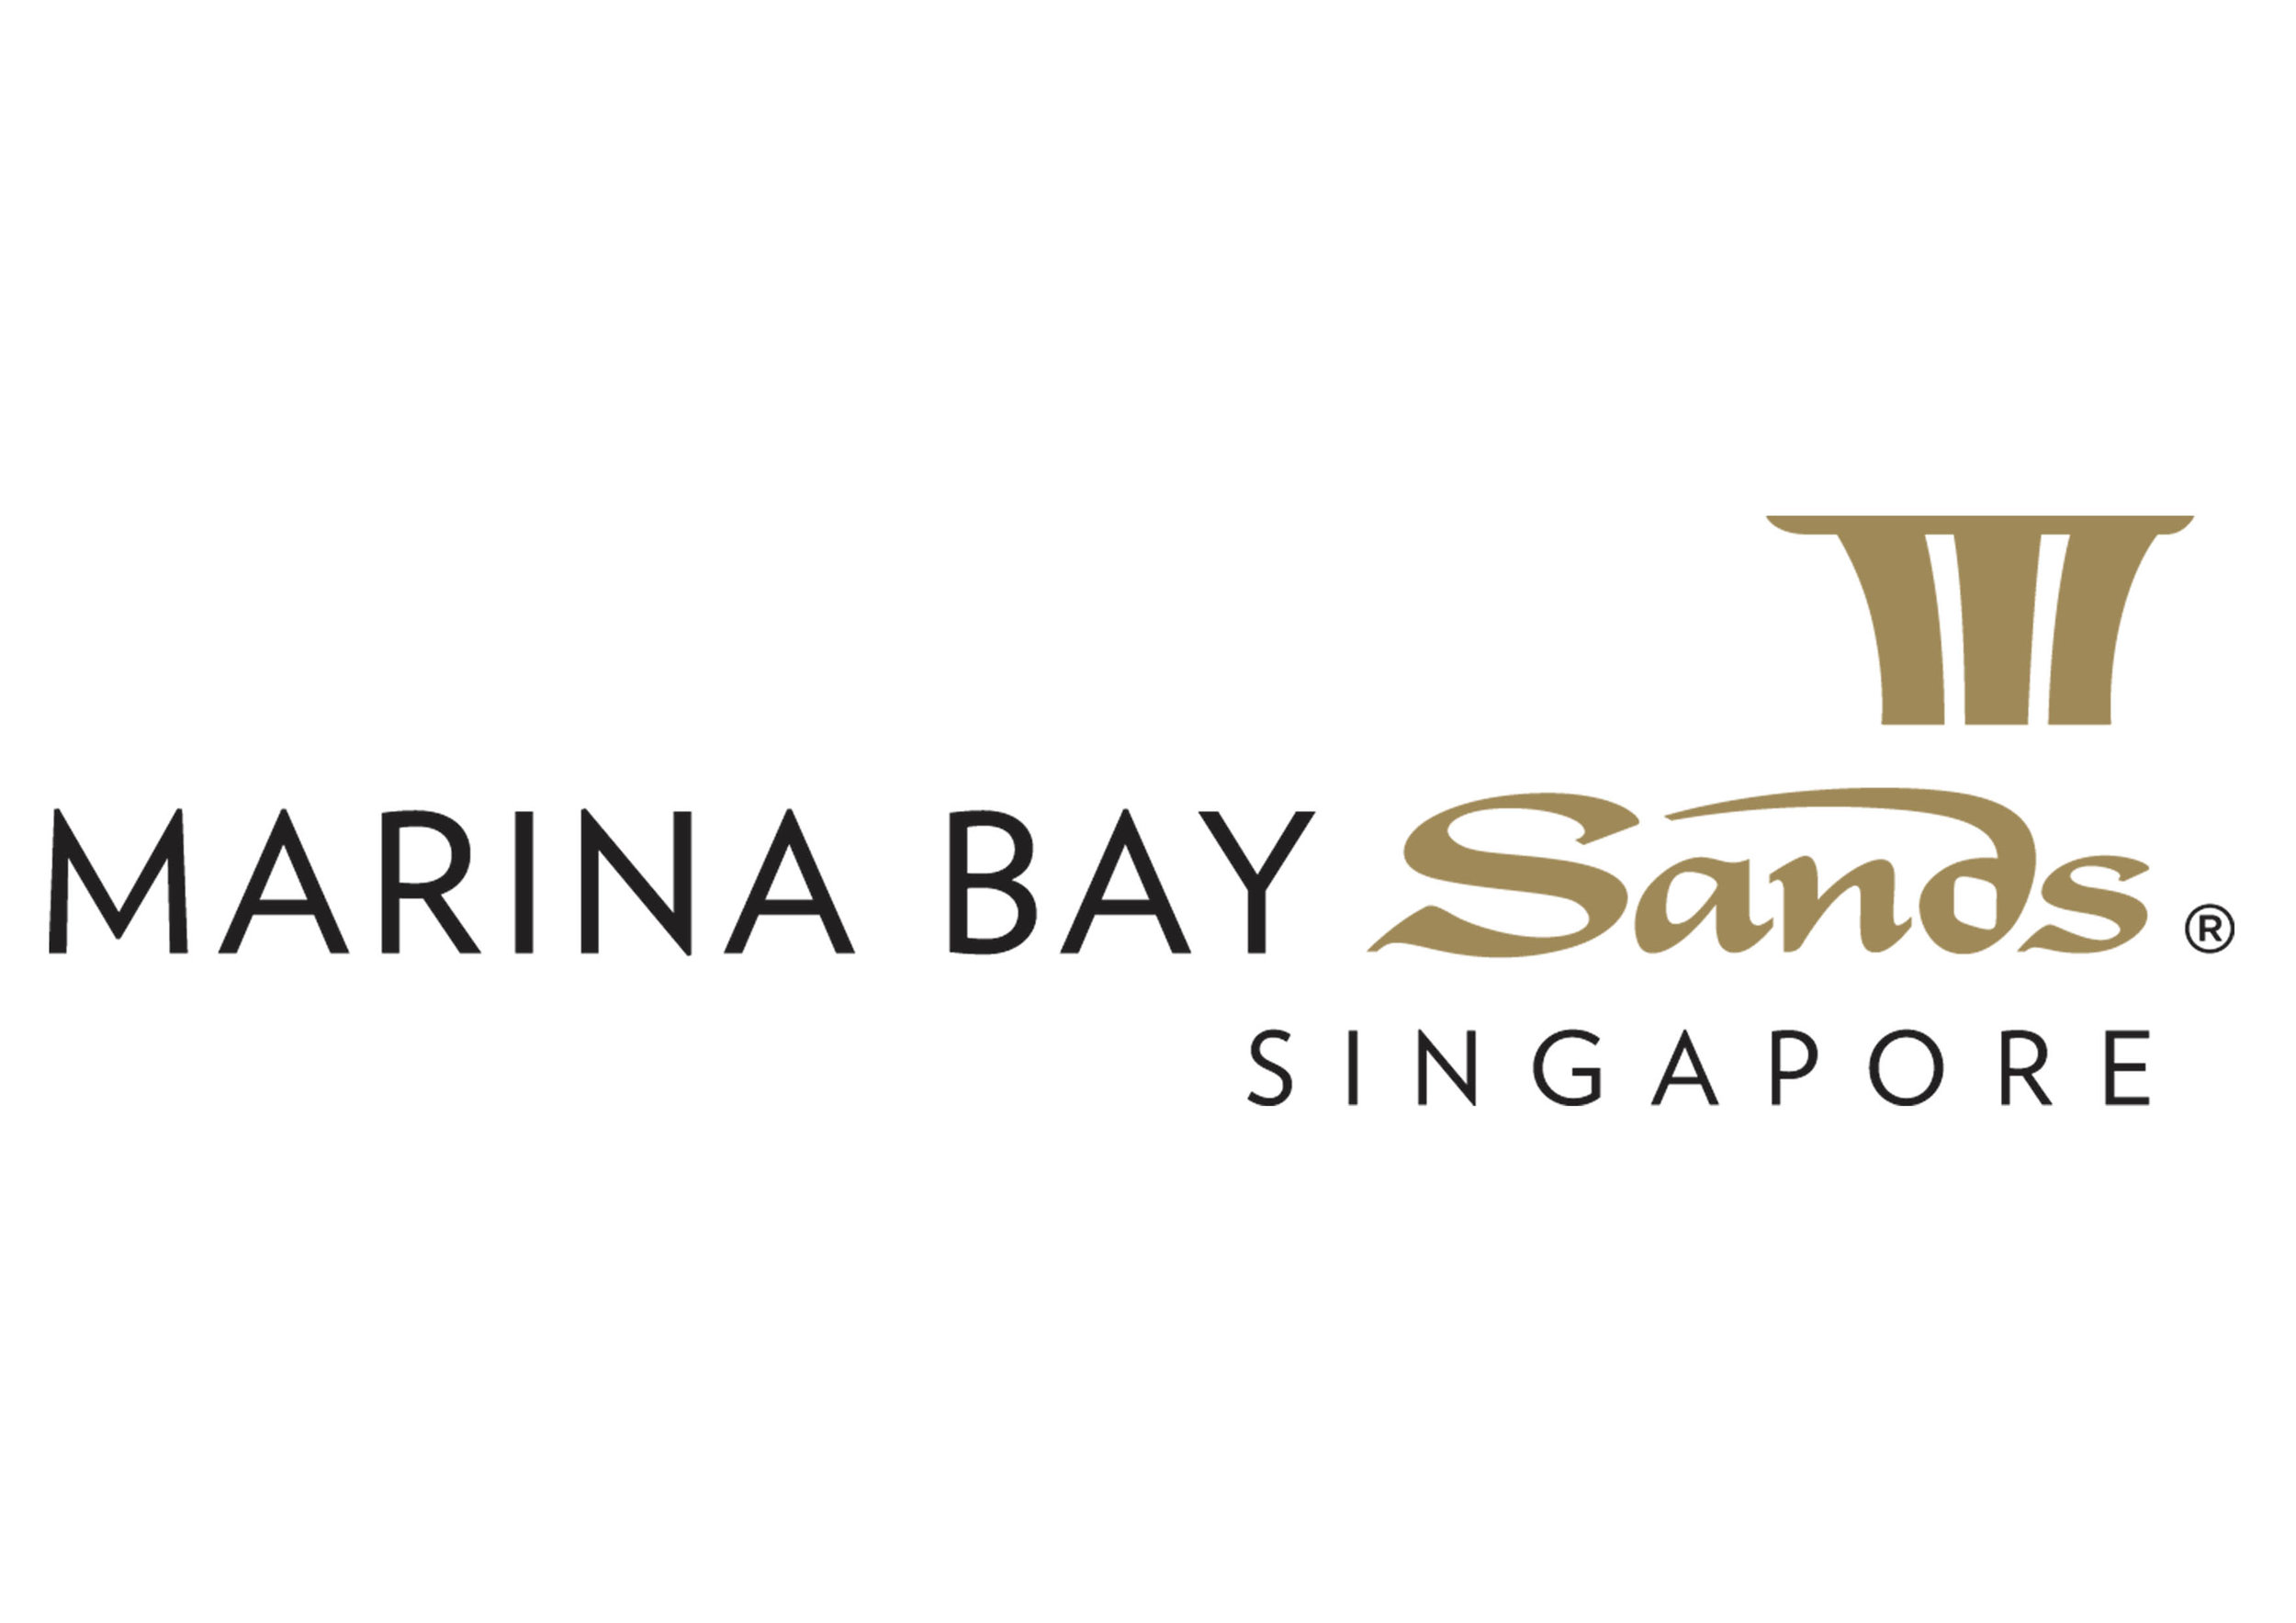  ..  Marina Bay Sands Singapore 